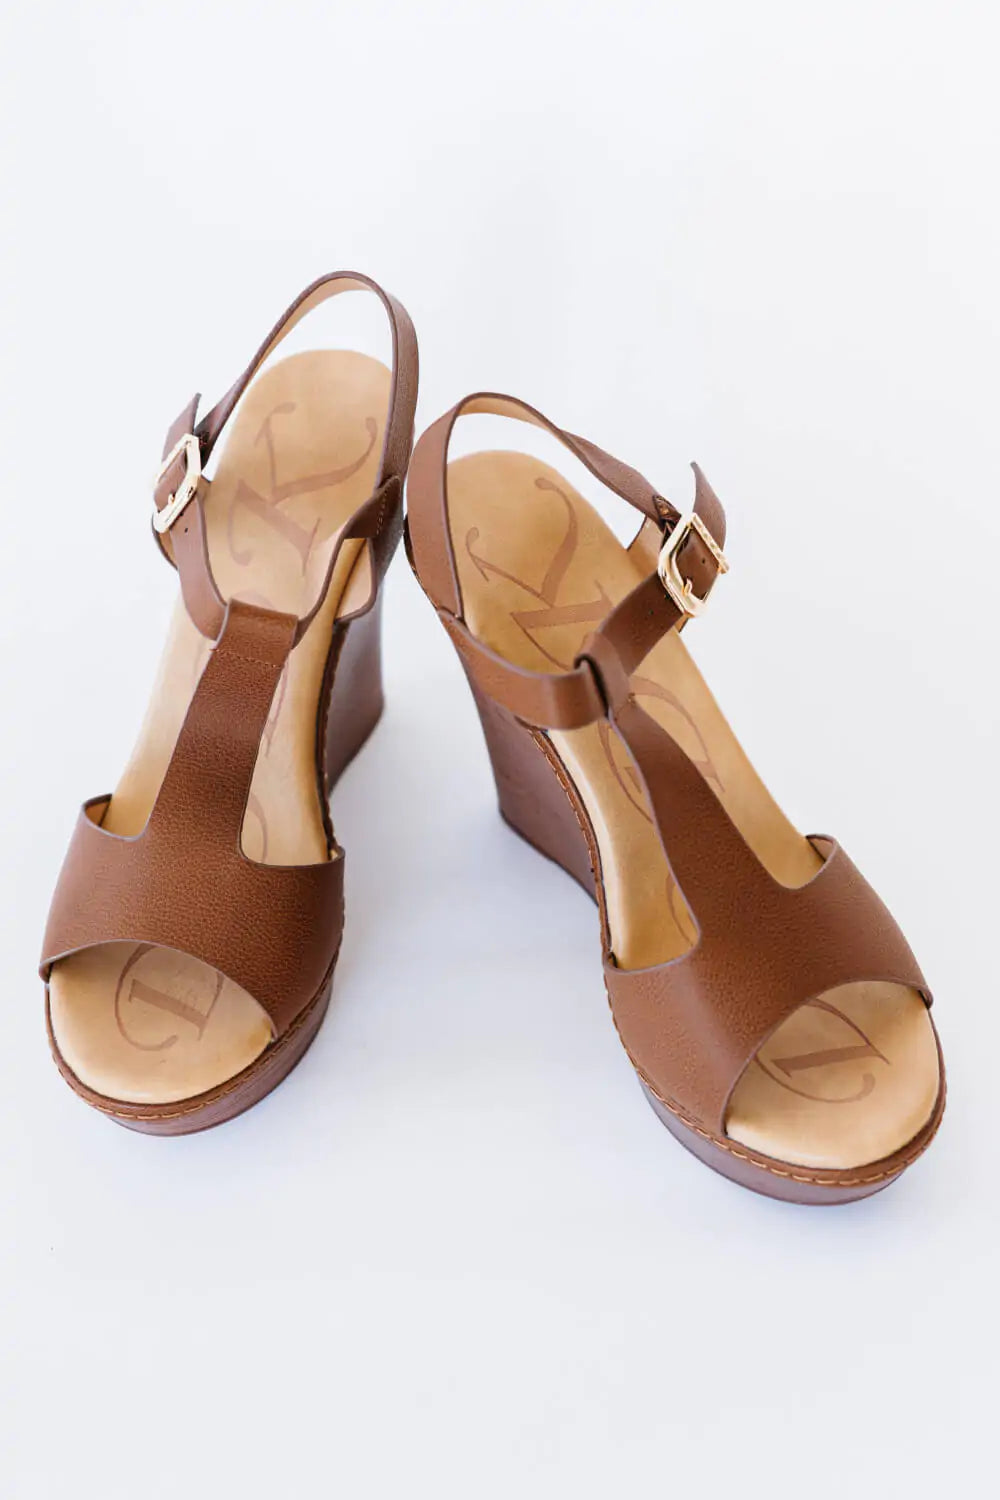 Tan Wedge Platform Sandals 5.5